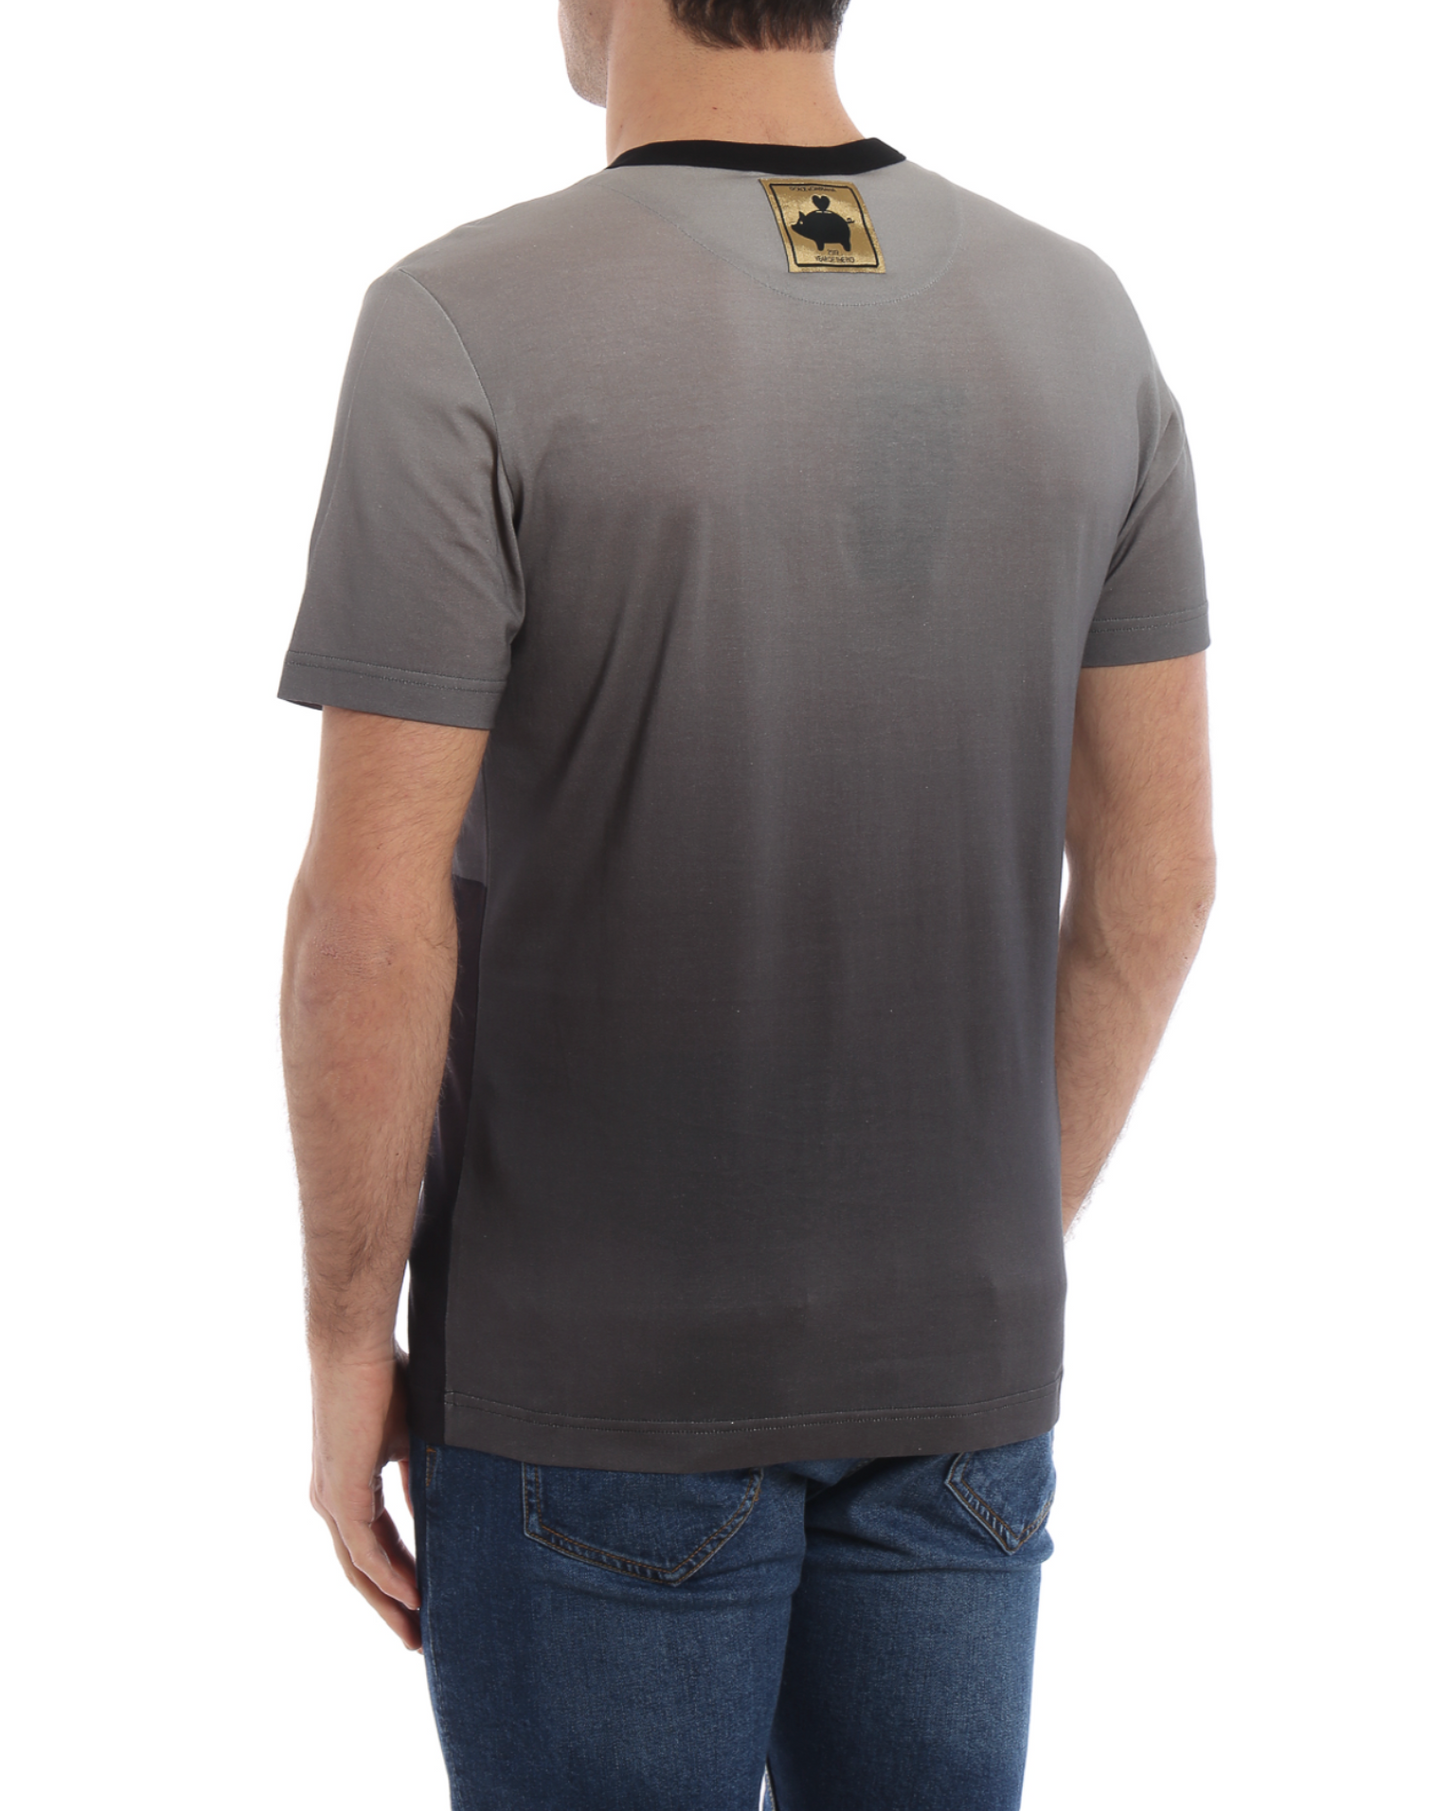 Elegant Gray Cotton T-Shirt with Designer Emblem